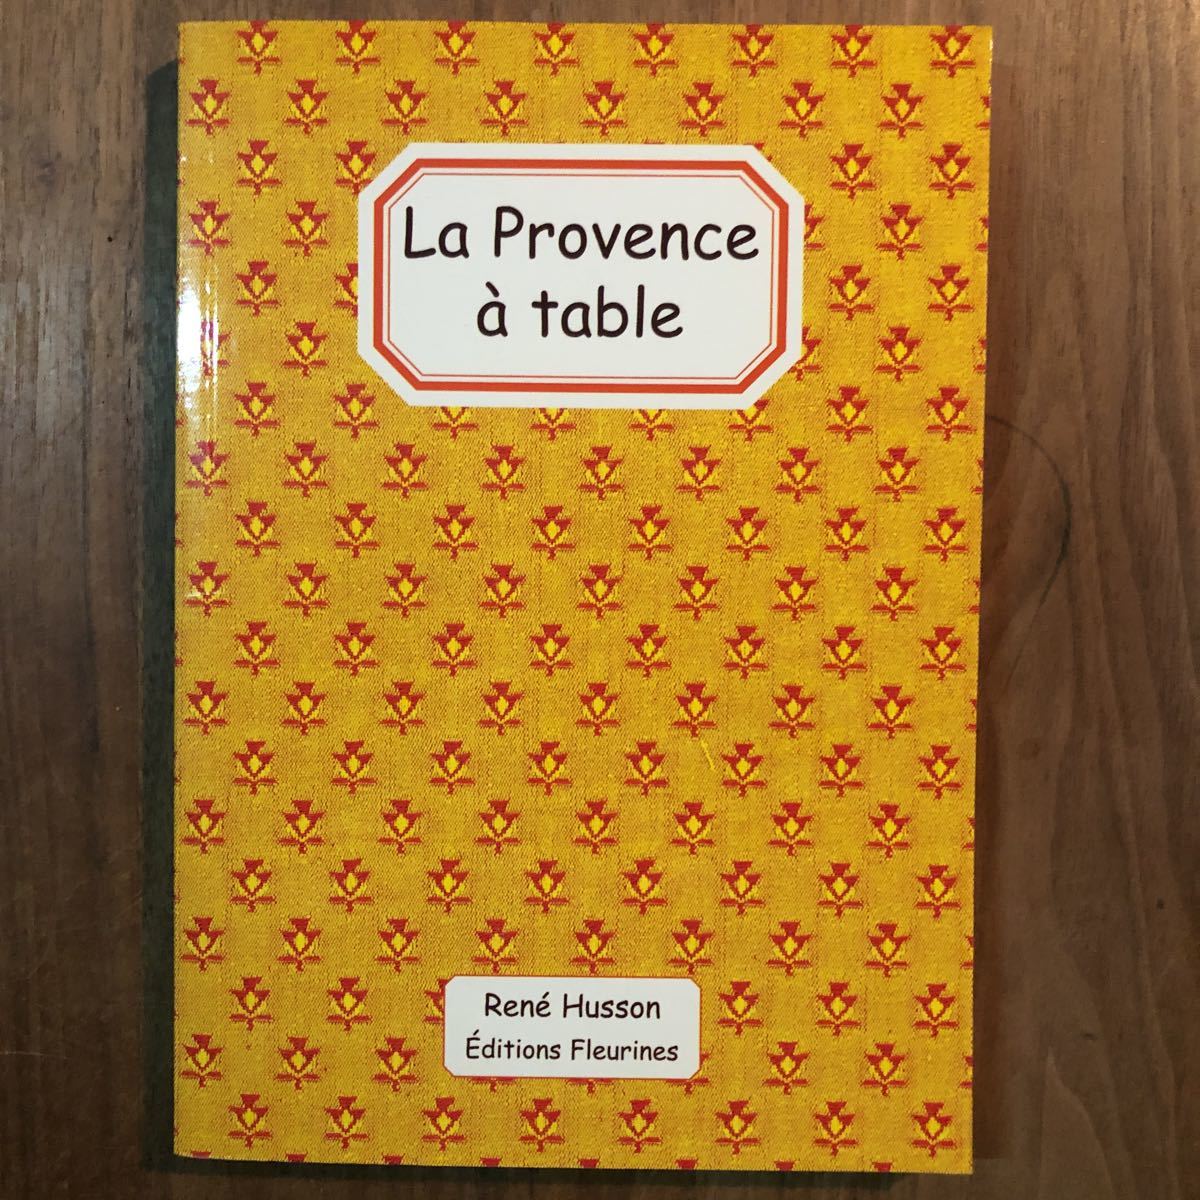 La Provence table French Pro Vence recipe book 